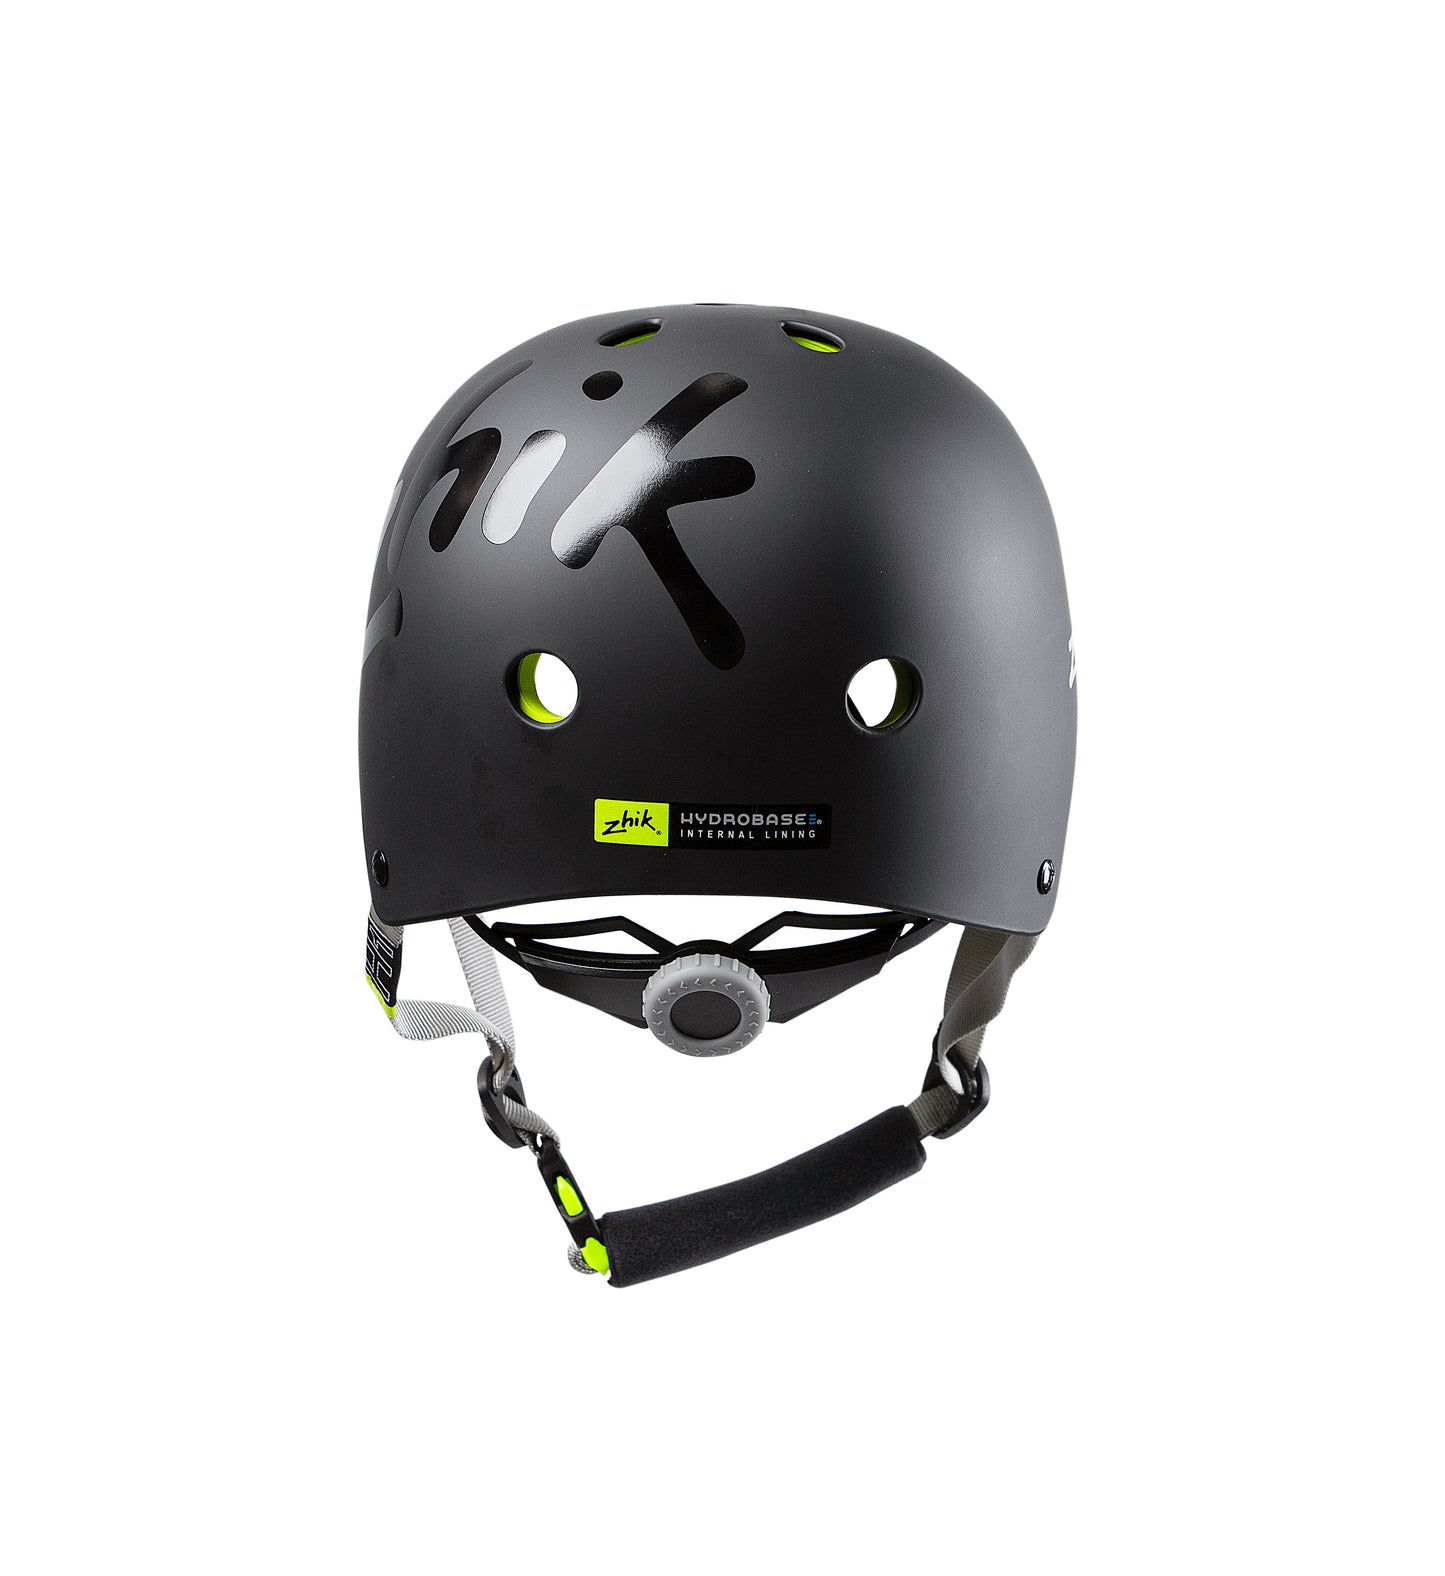 ZHIK H1 Helmet - Black